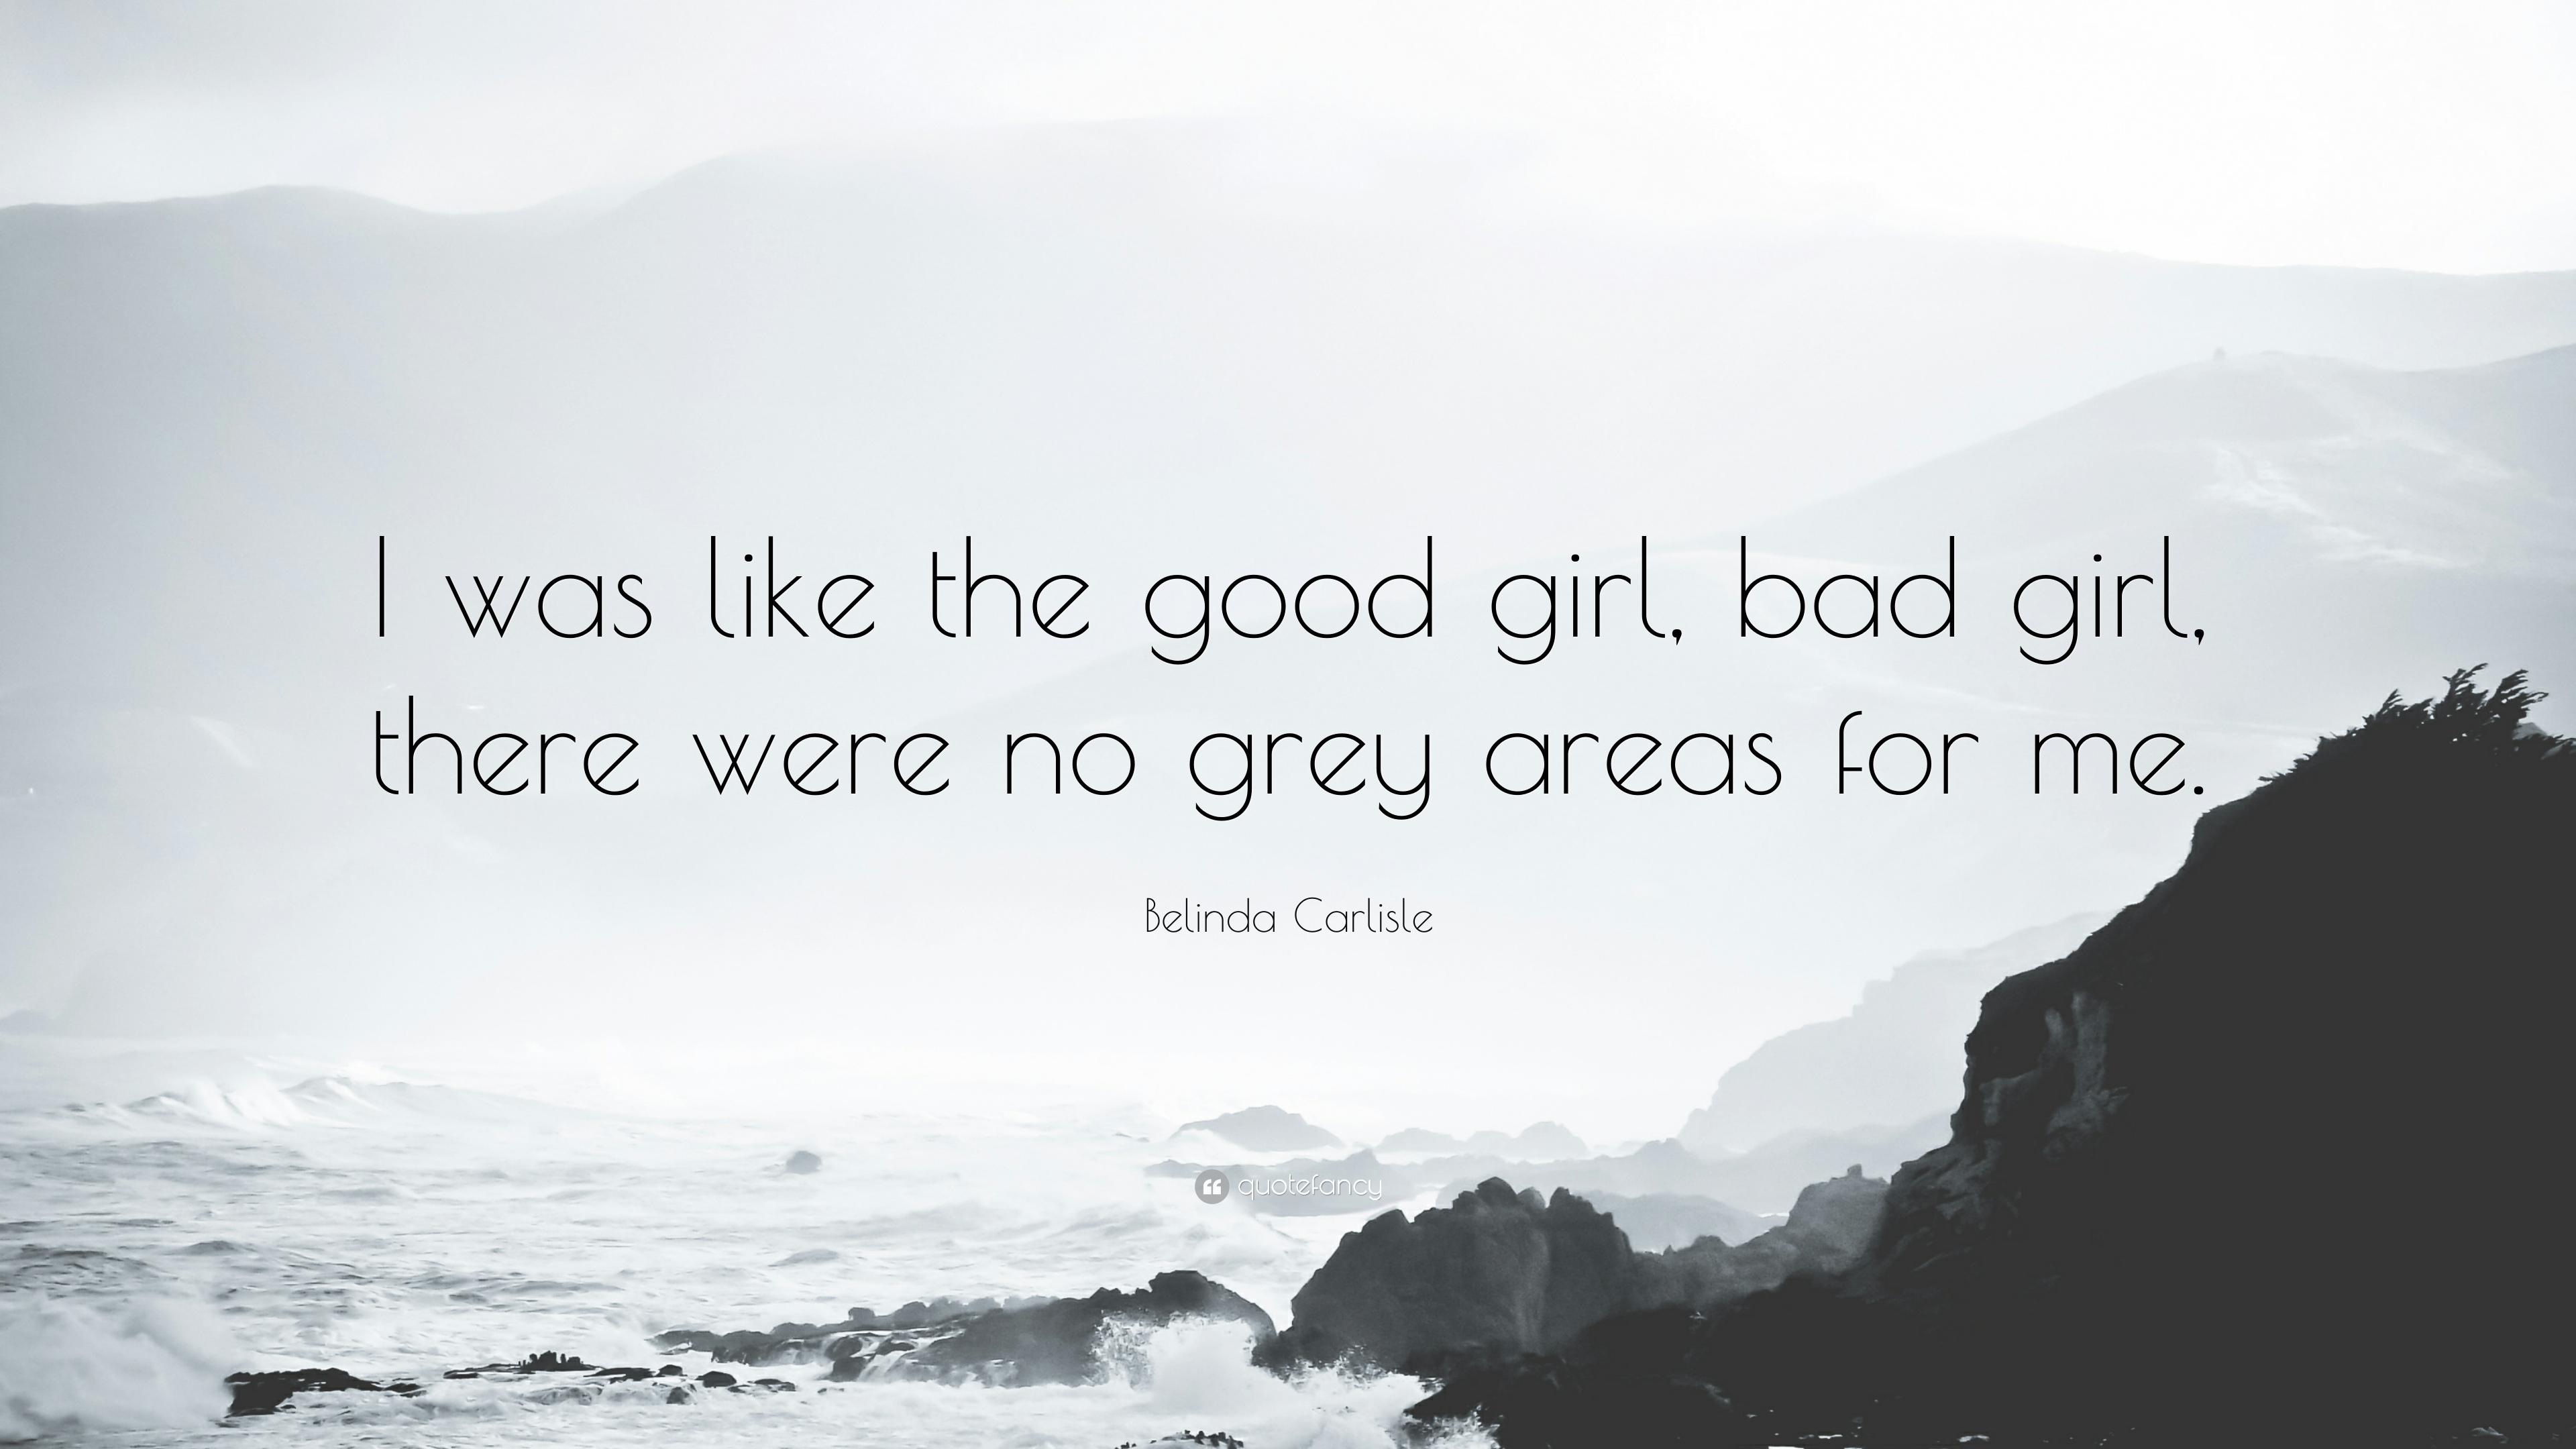 Belinda Carlisle Quote: “I was like the good girl, bad girl, there